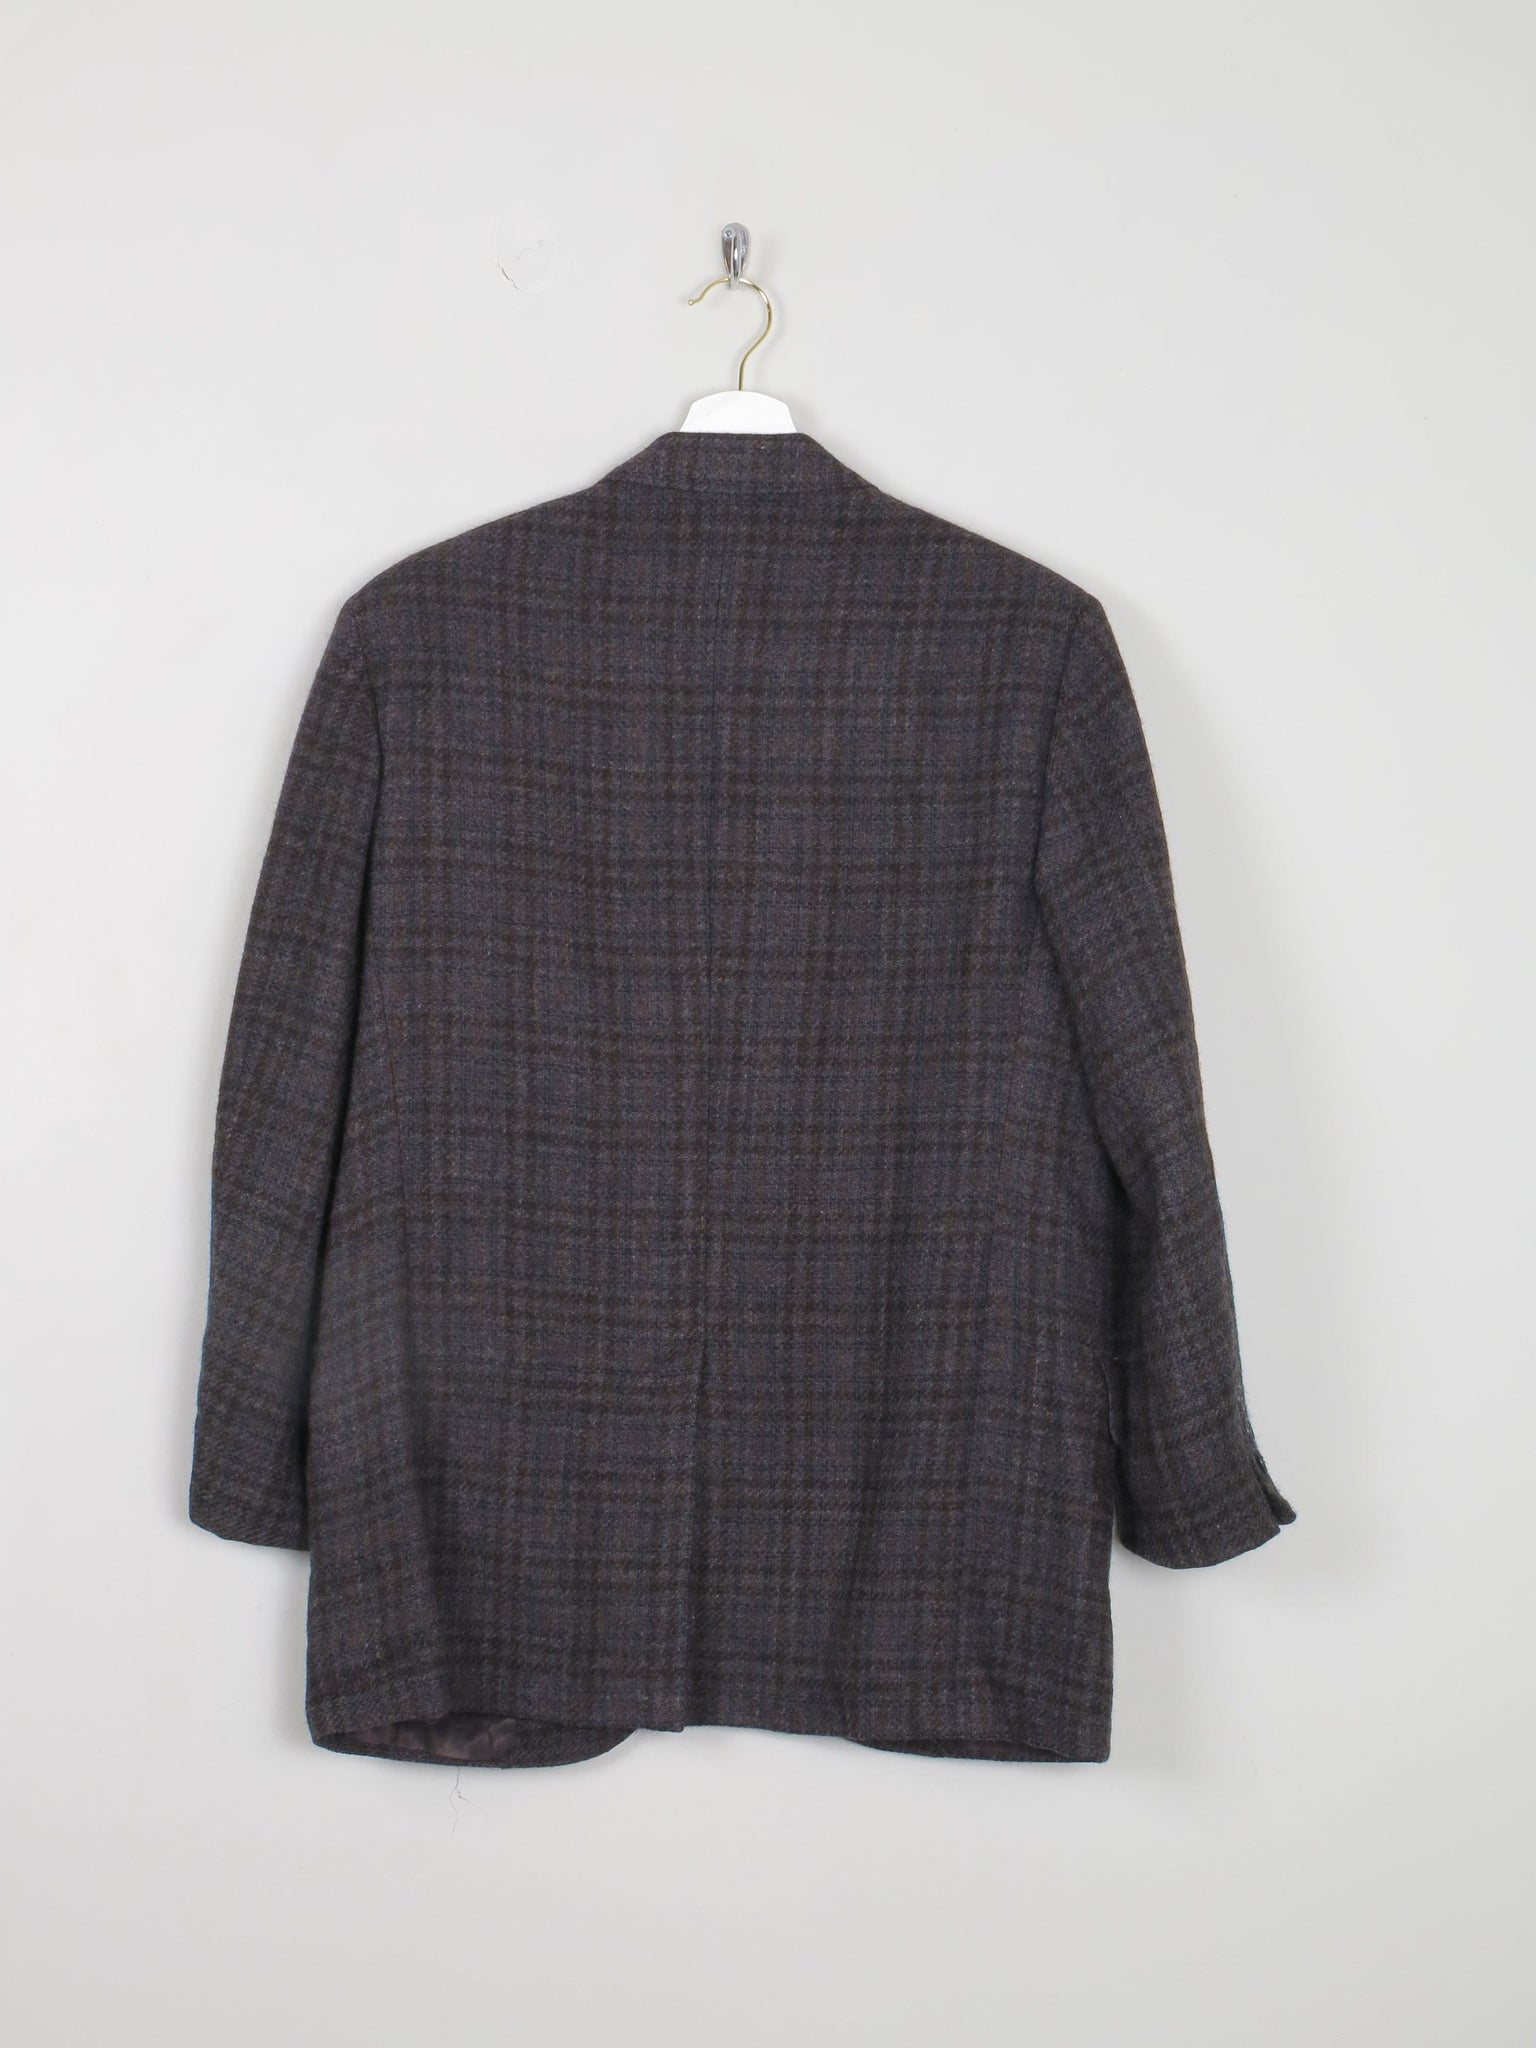 Men's Vintage Tweed Jacket Charcoal 1960's Check 38/40 [Short Sleeves] - The Harlequin